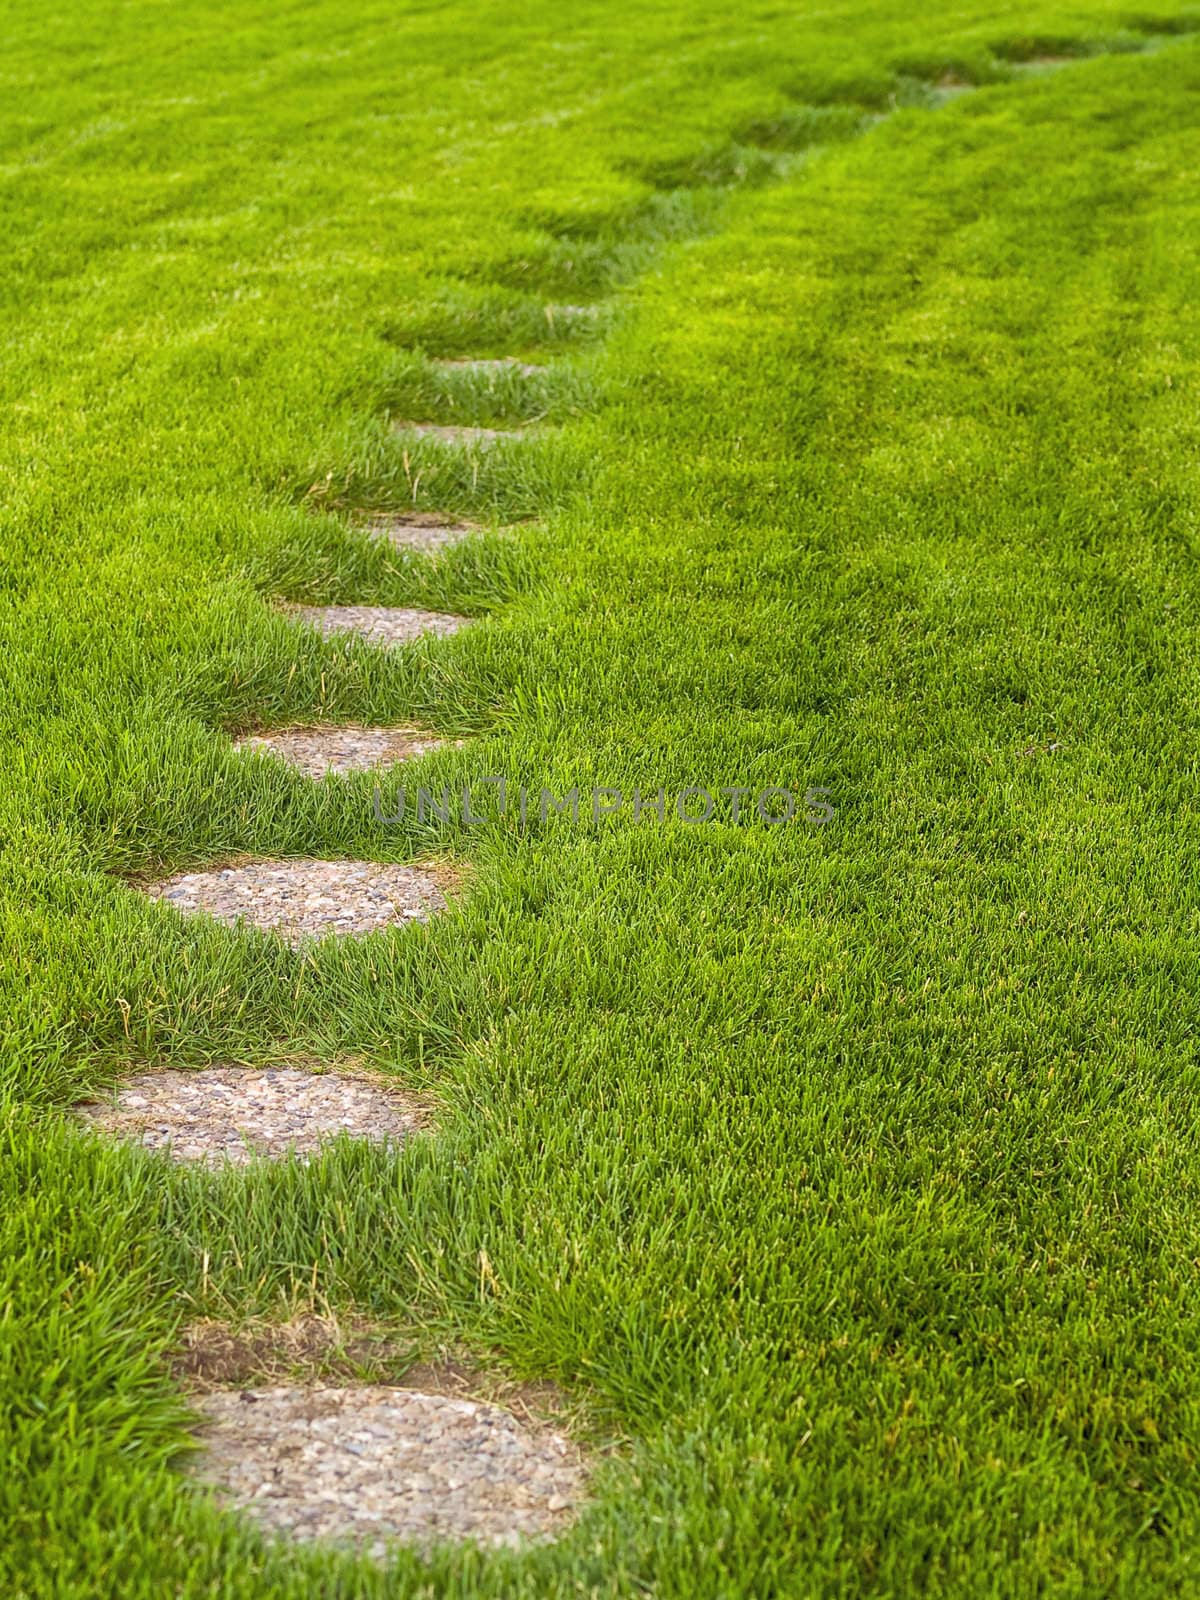 Stone path through a green grassy lawn background